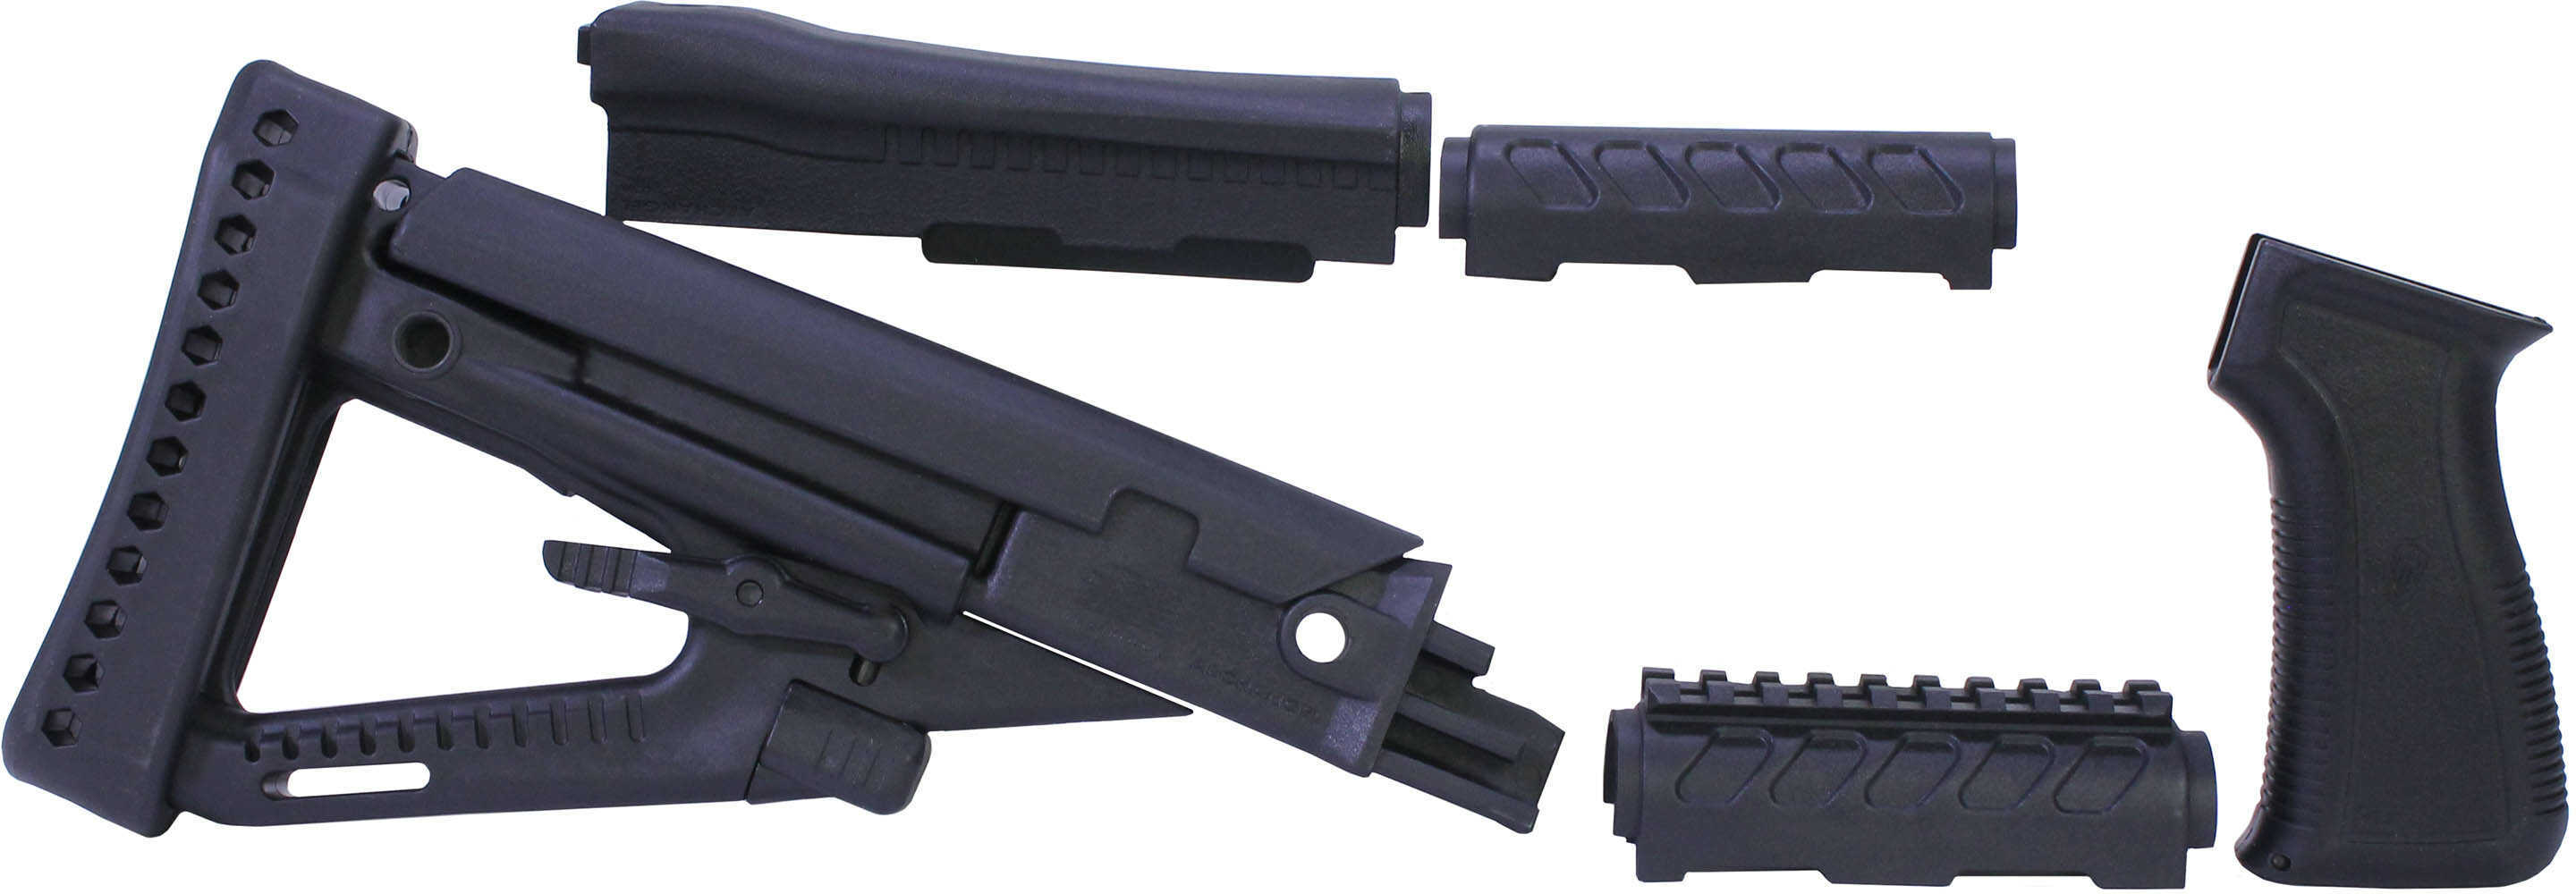 ProMag Archangel Op for AK-47/AKM Series Complete Set, Black Polymer Md: AA47